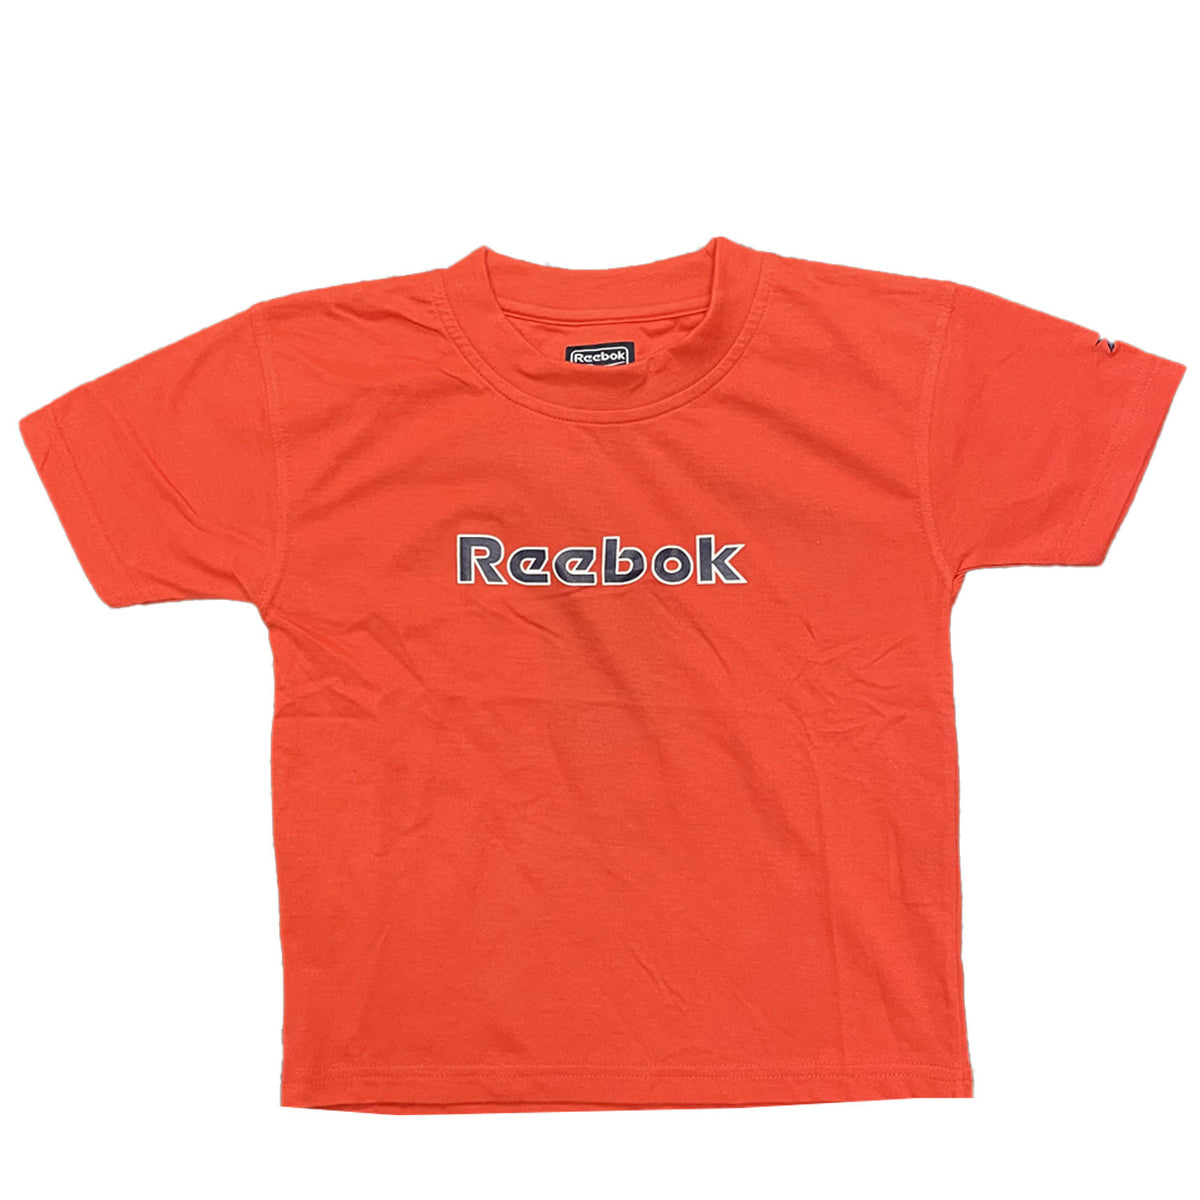 Reebok's Infant Sports T-Shirt 2